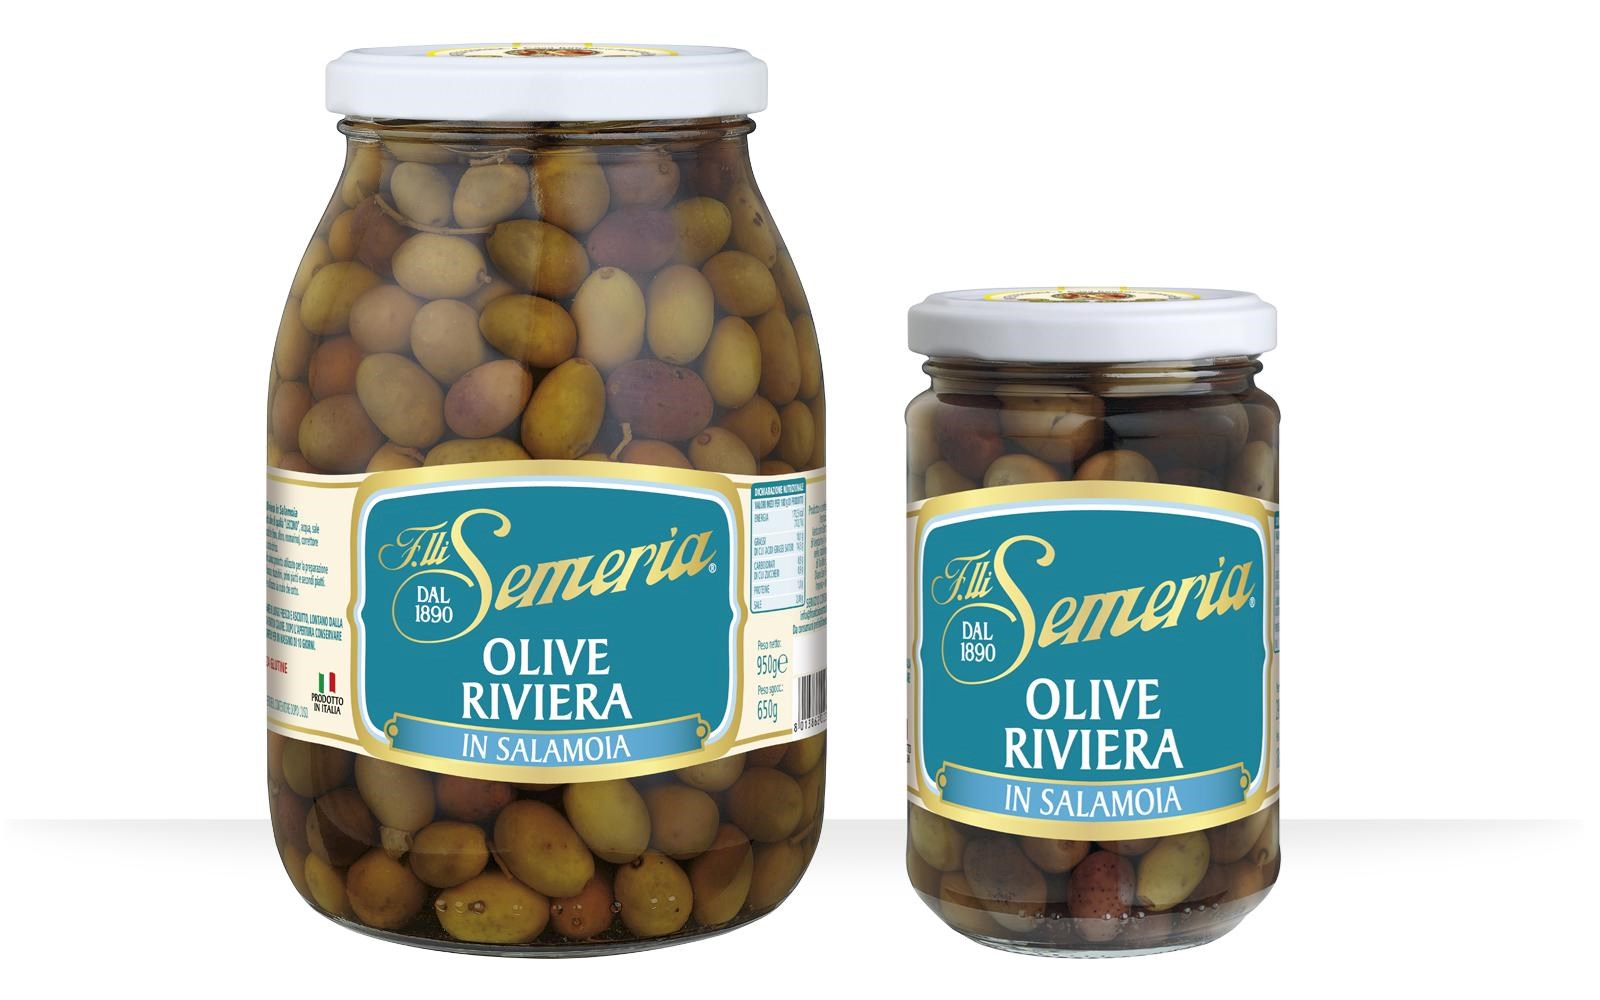 Olive Riviera in Salamoia